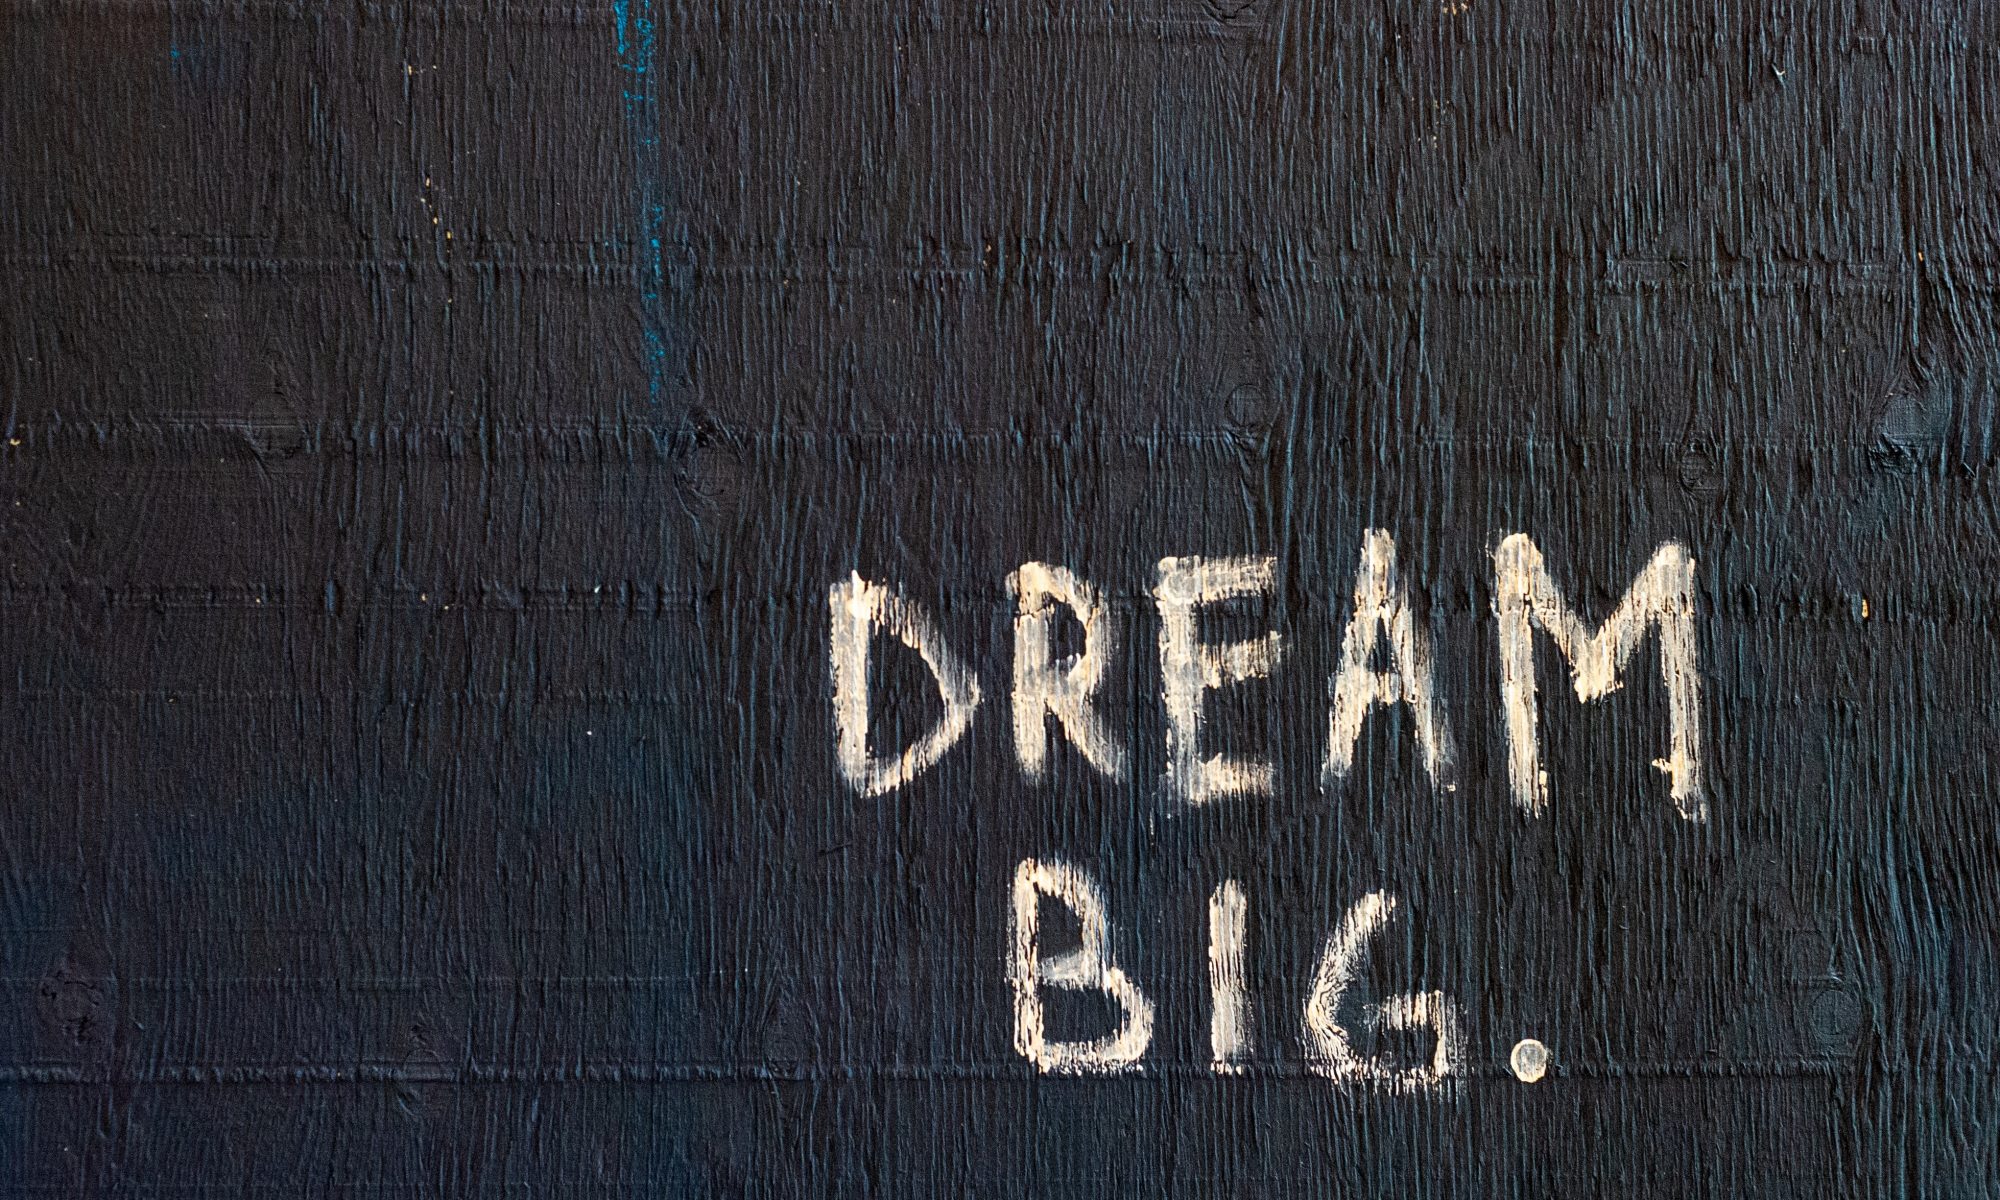 Written words "dream big"